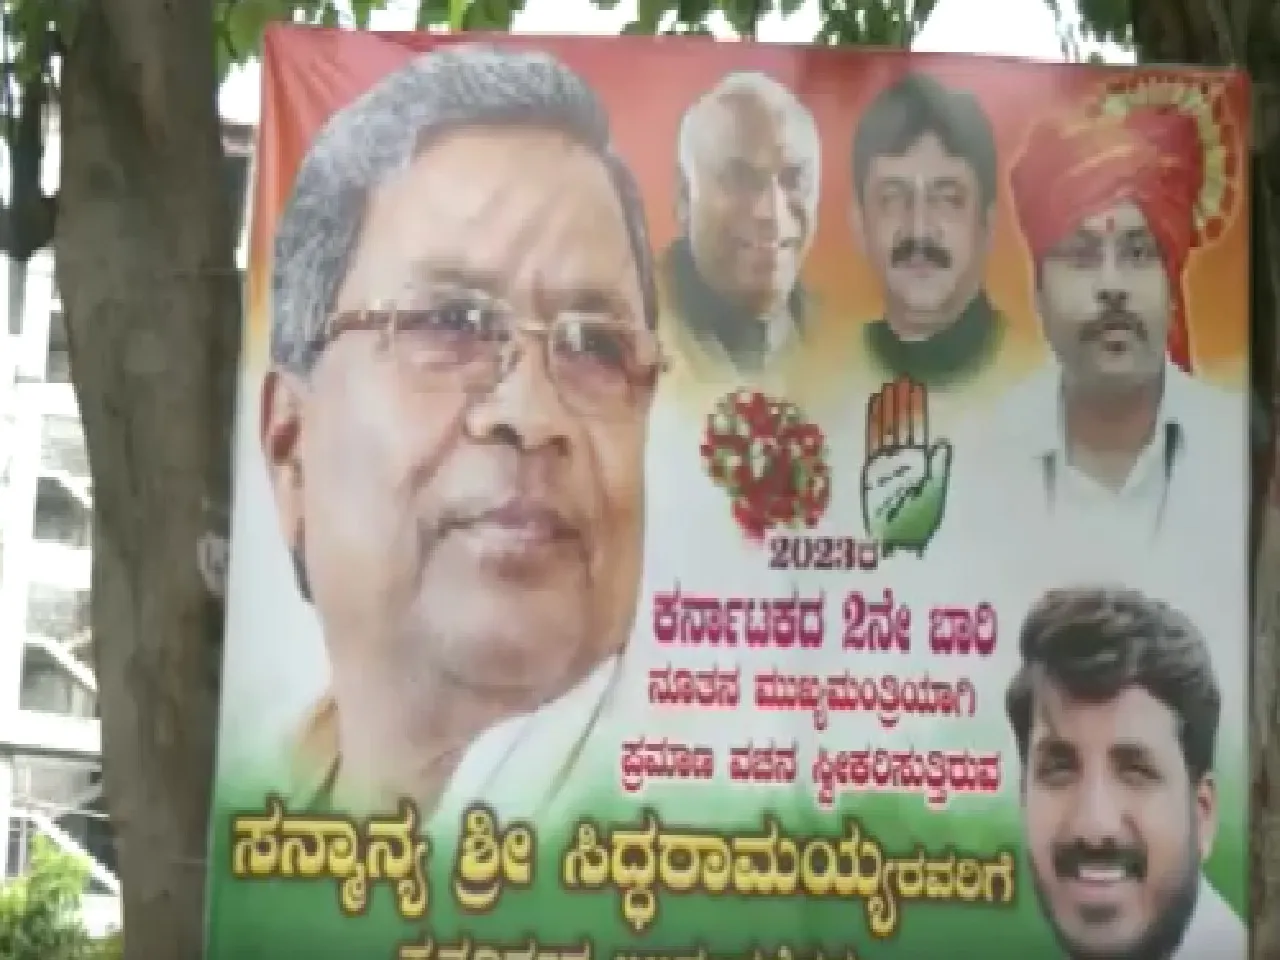 Big news: Name of Karnataka's next Chief Minister on the poster